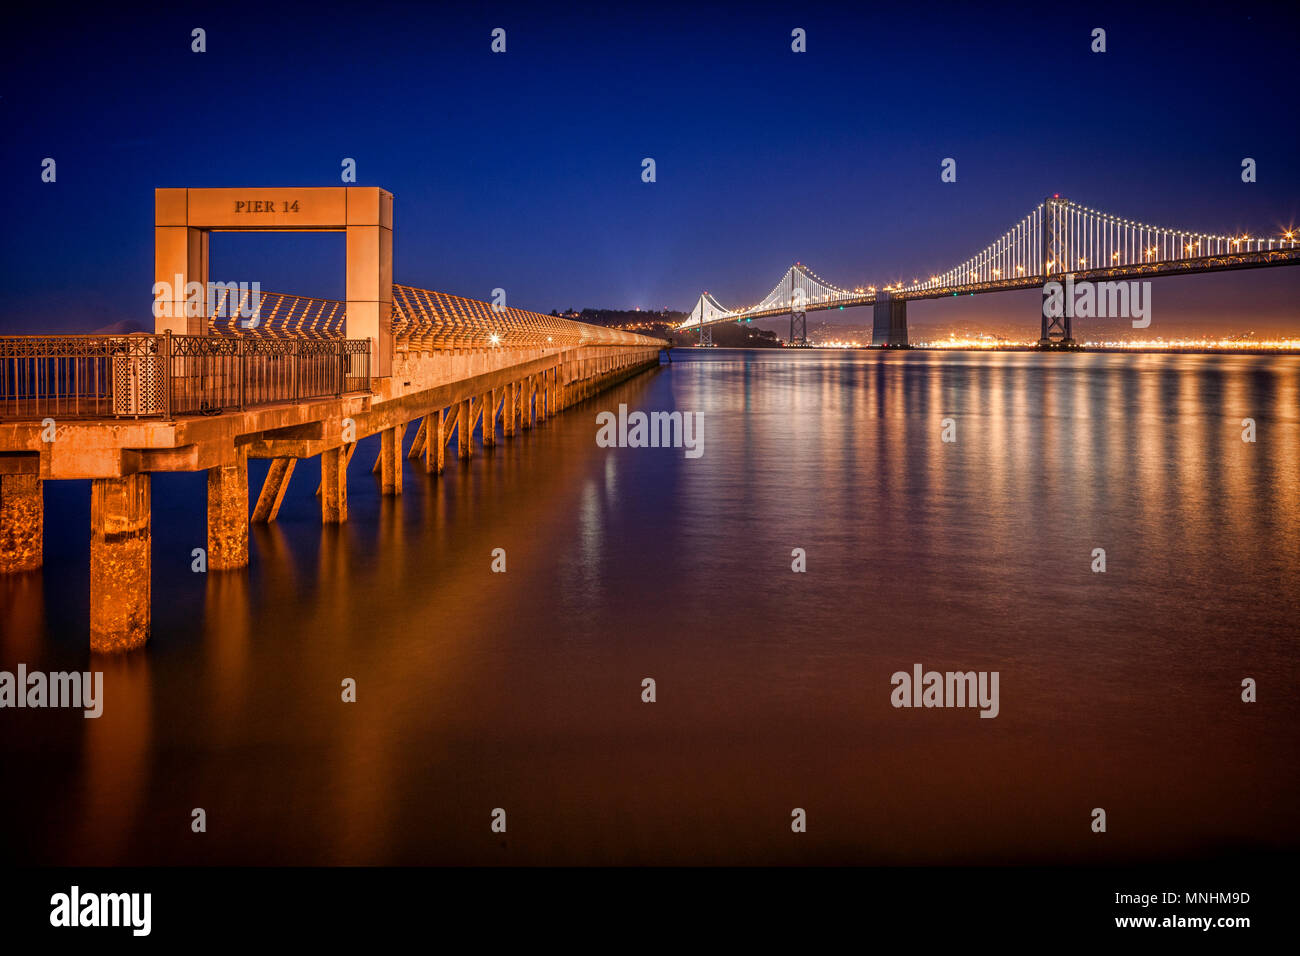 Le San Francisco Bay Bridge at night de Pier 14. Banque D'Images